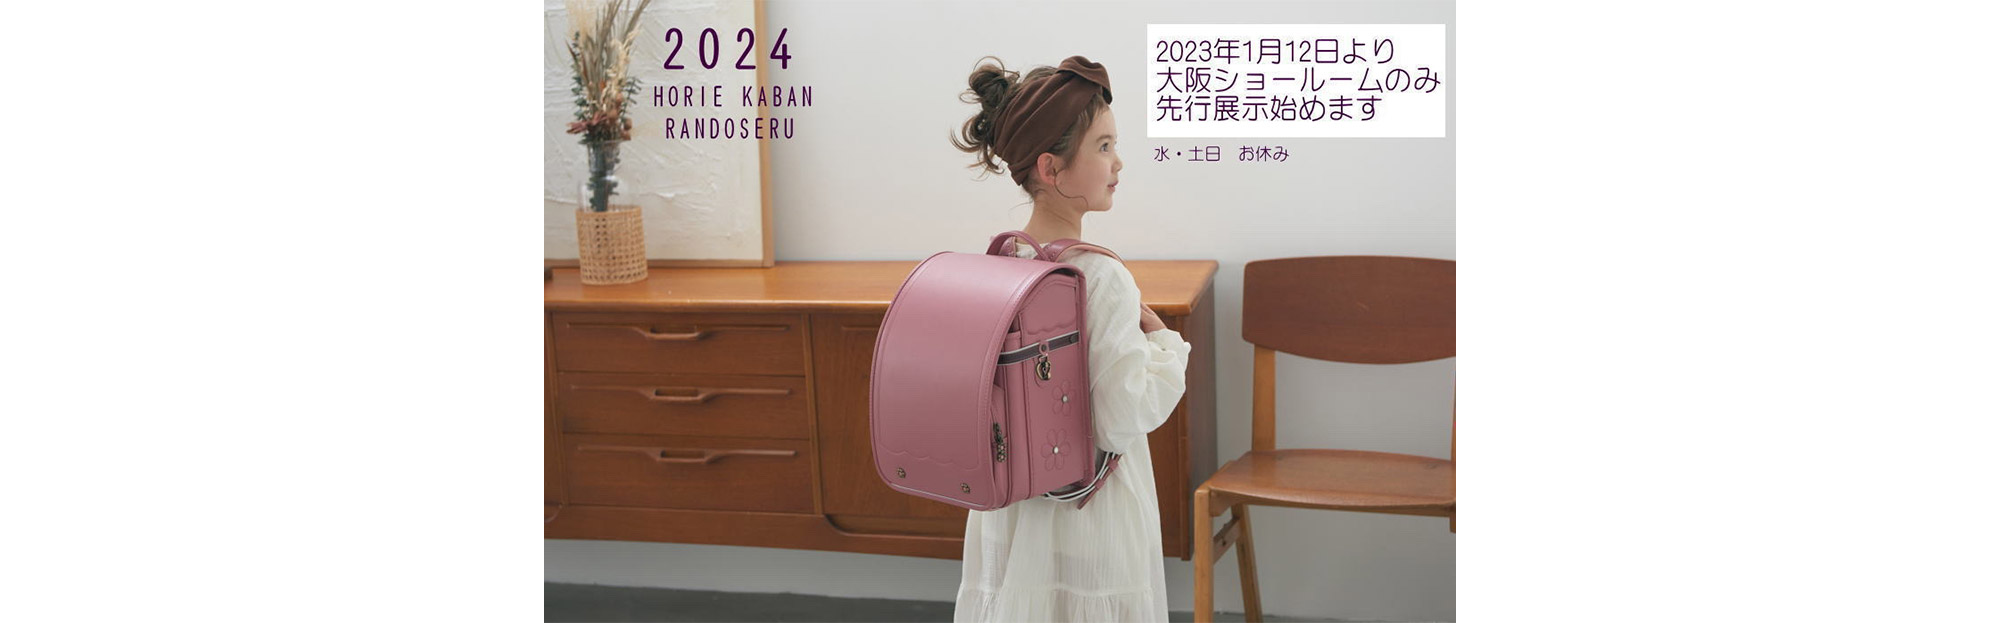 2024HORIE KABAN Randoseru 2023年1月12日より 大阪ショールームのみ選考展示始めます